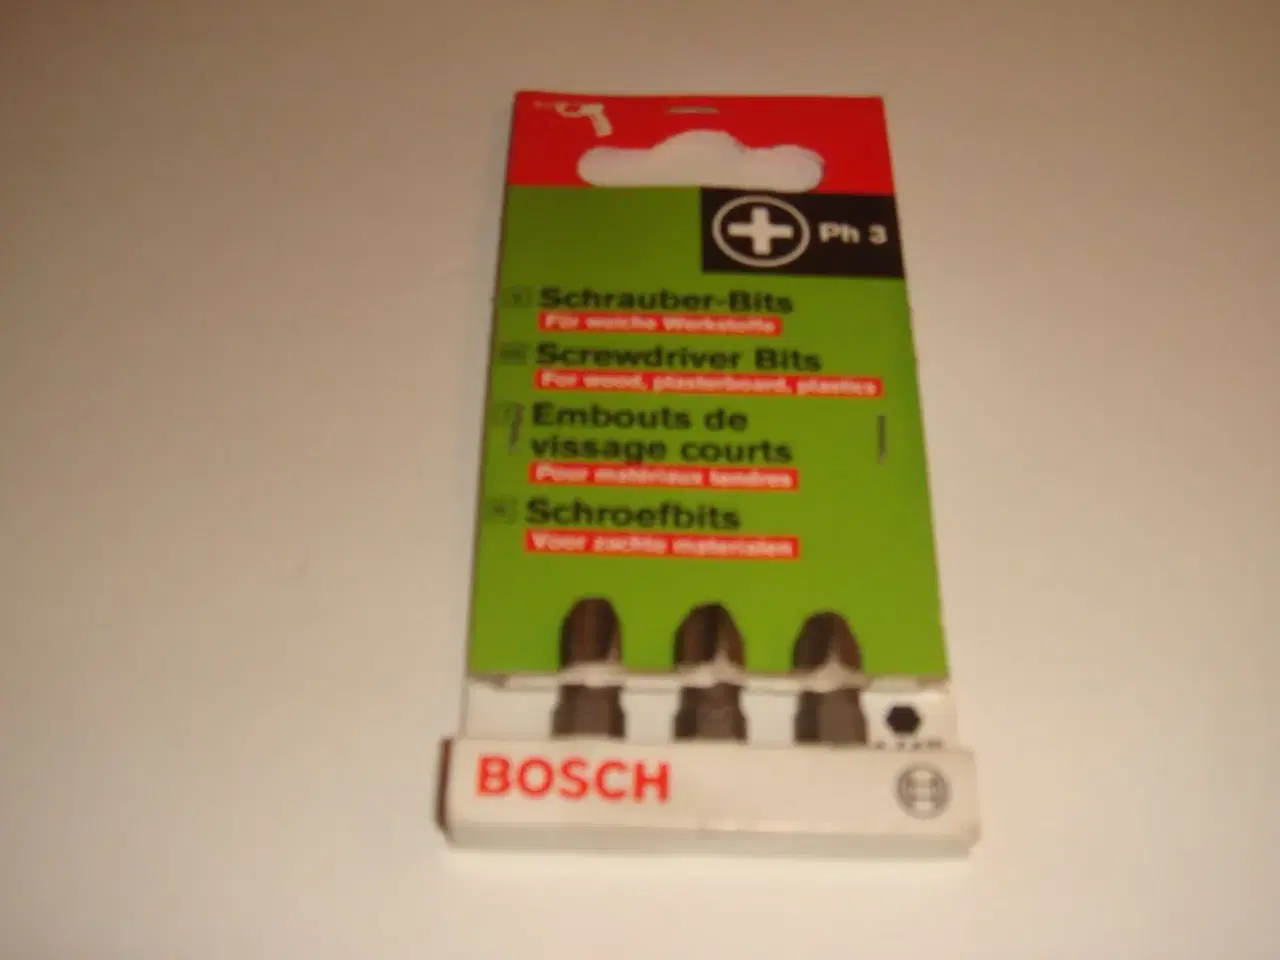 Billede 1 - Bosch PH3 bits - 3 styks pakning